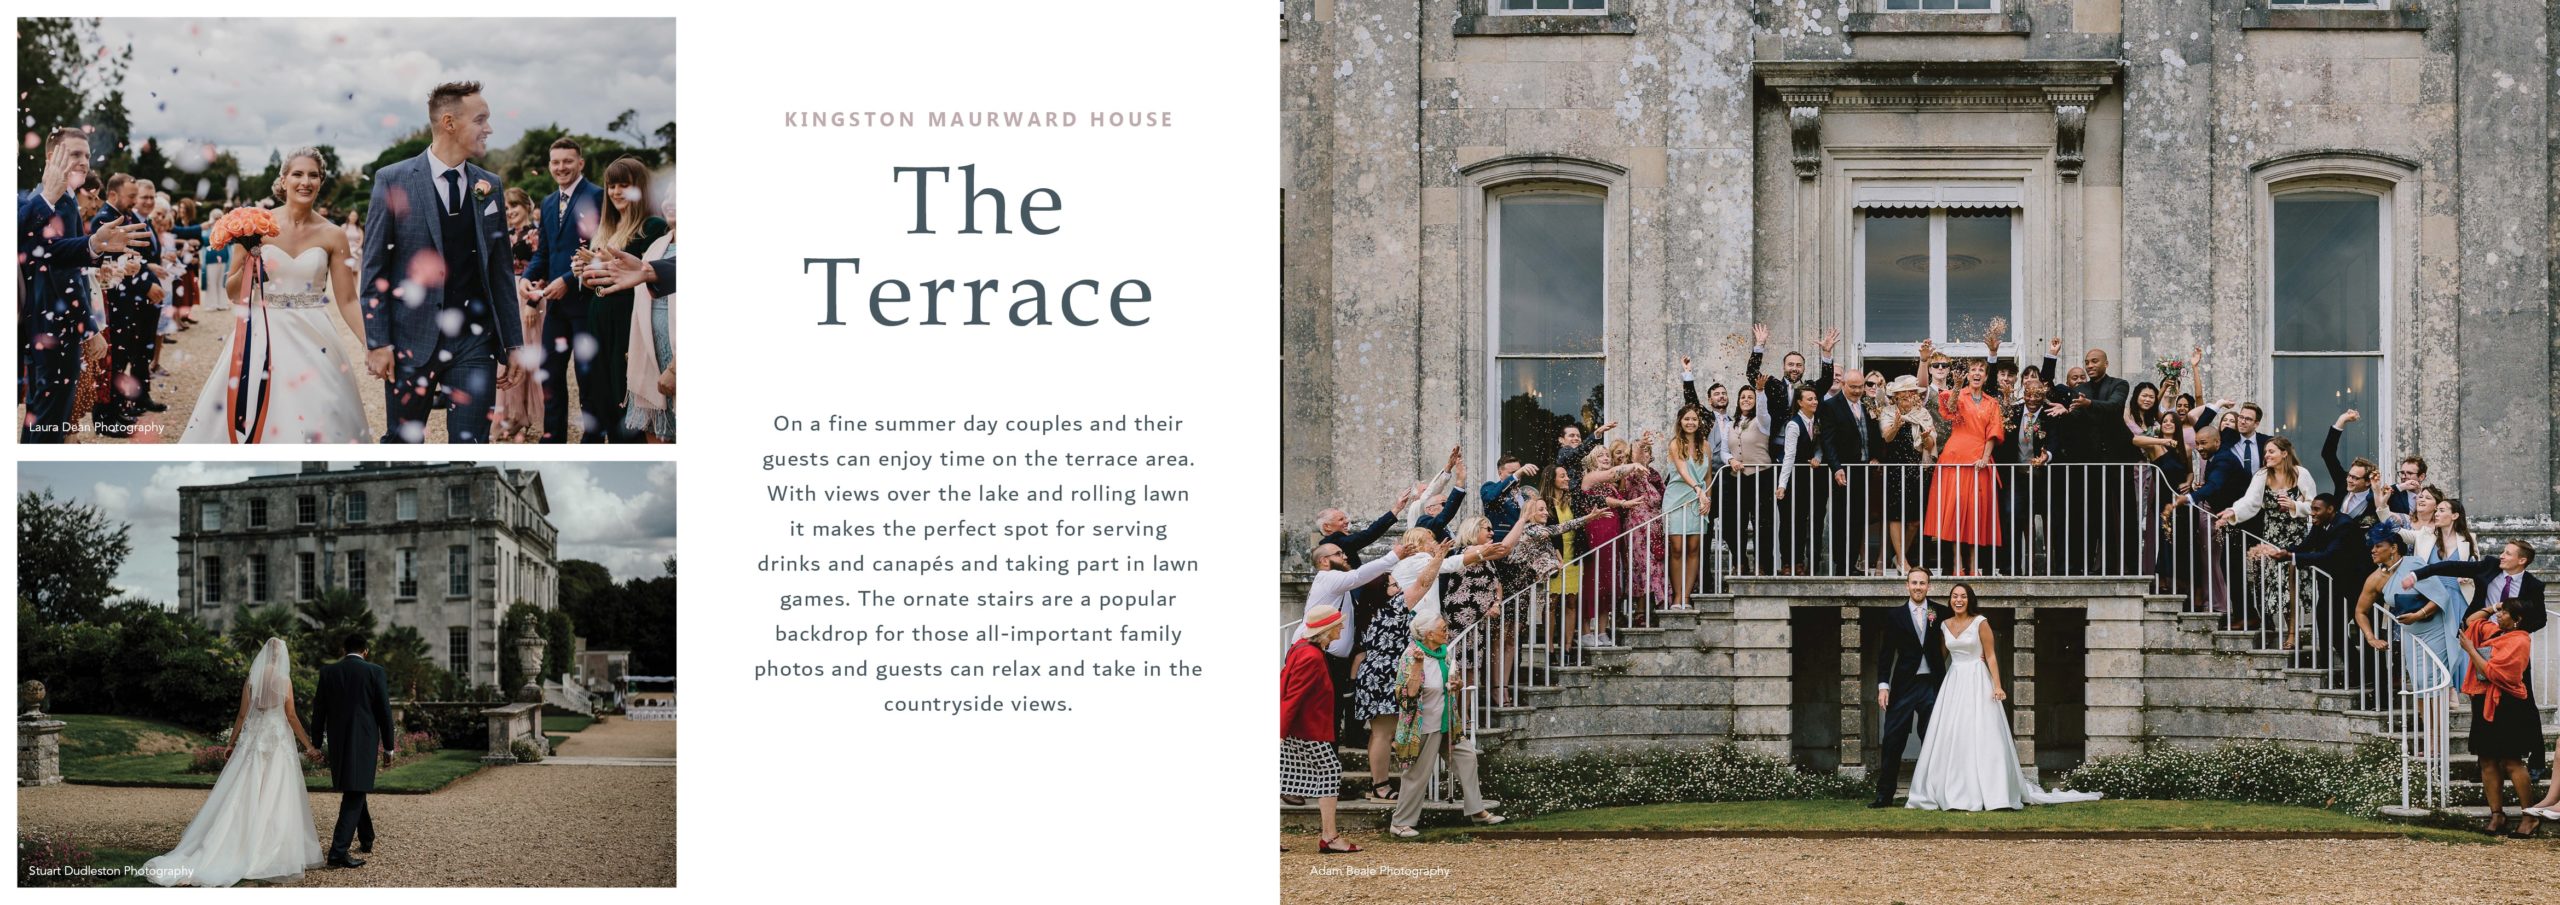 The Terrace brochure spreads